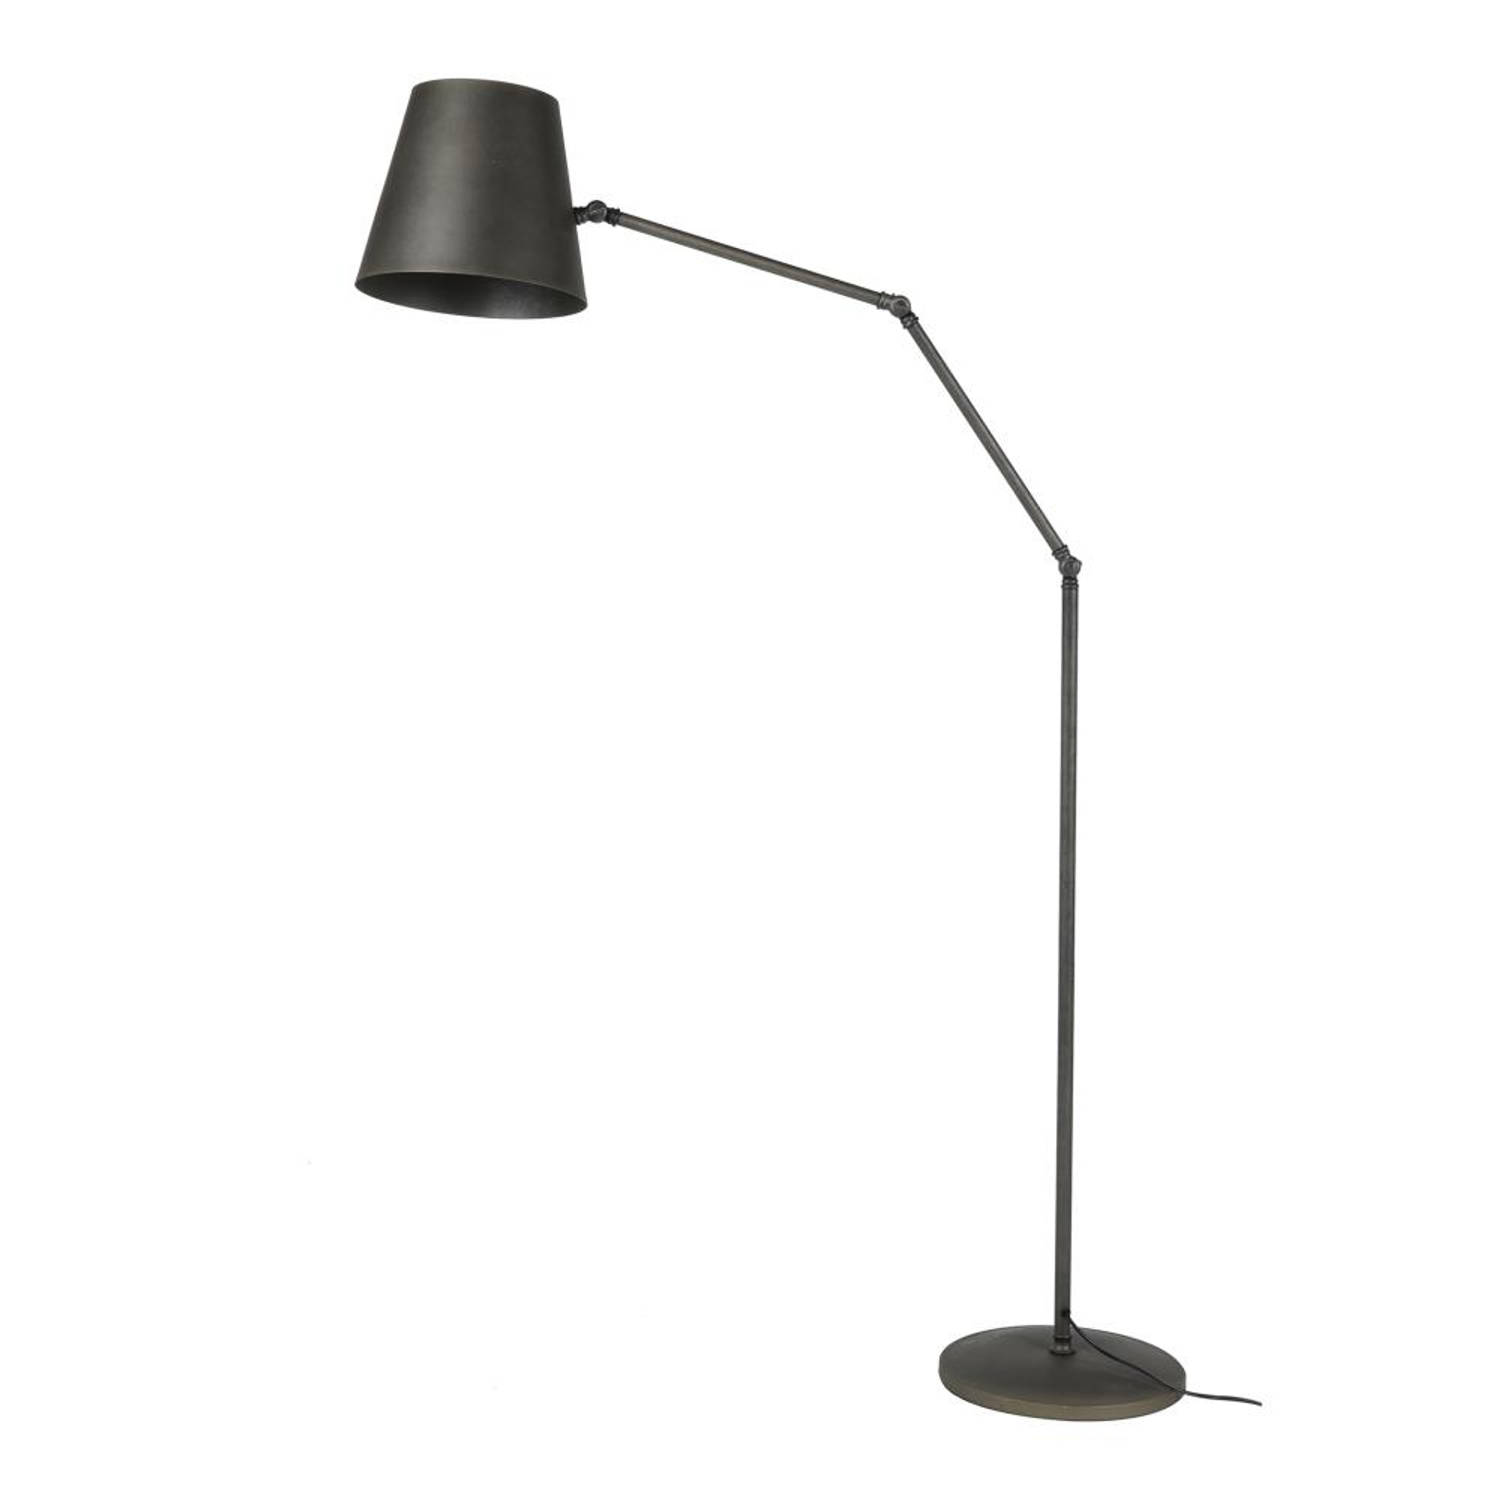 Giga Meubel Gm Vloerlamp Charcoal - Verstelbaar - Metaal - Lamp Knik